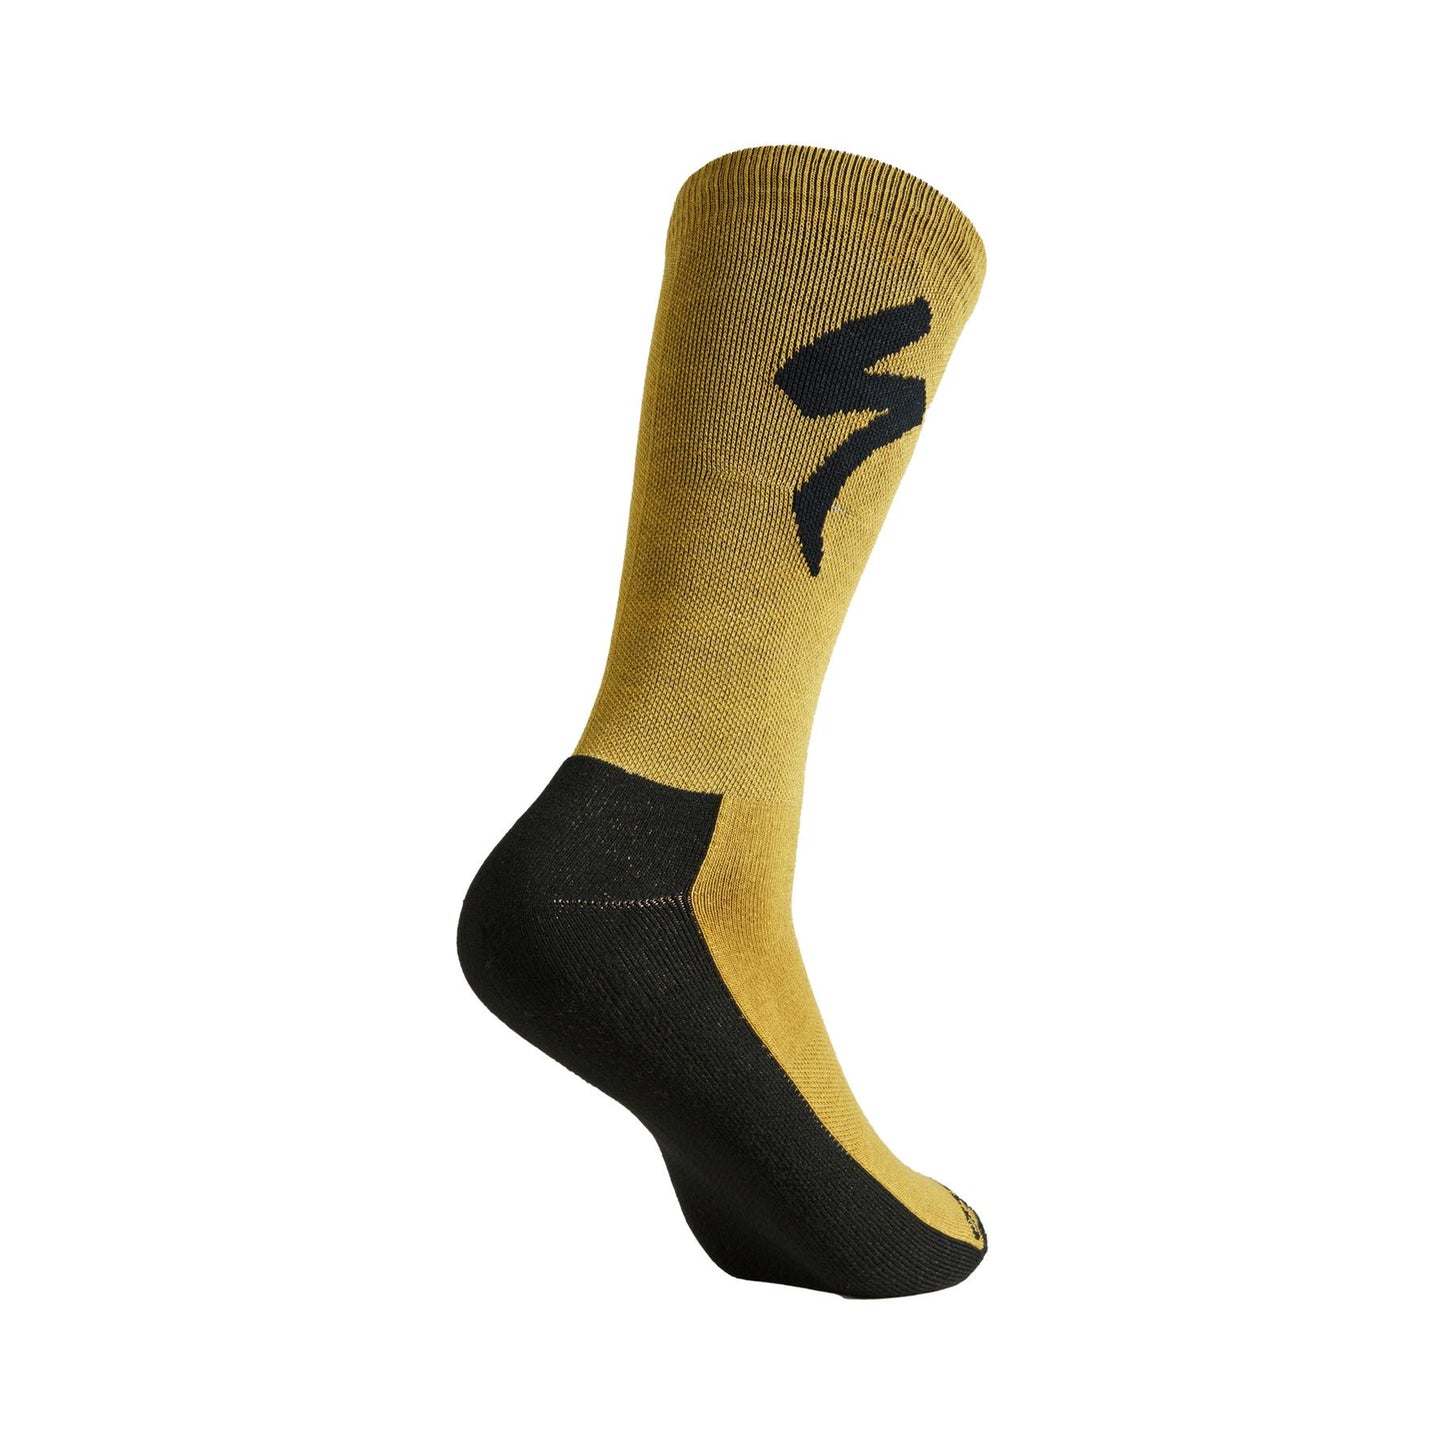 PrimaLoft Lightweight Tall Logo Socks in Harvest Gold